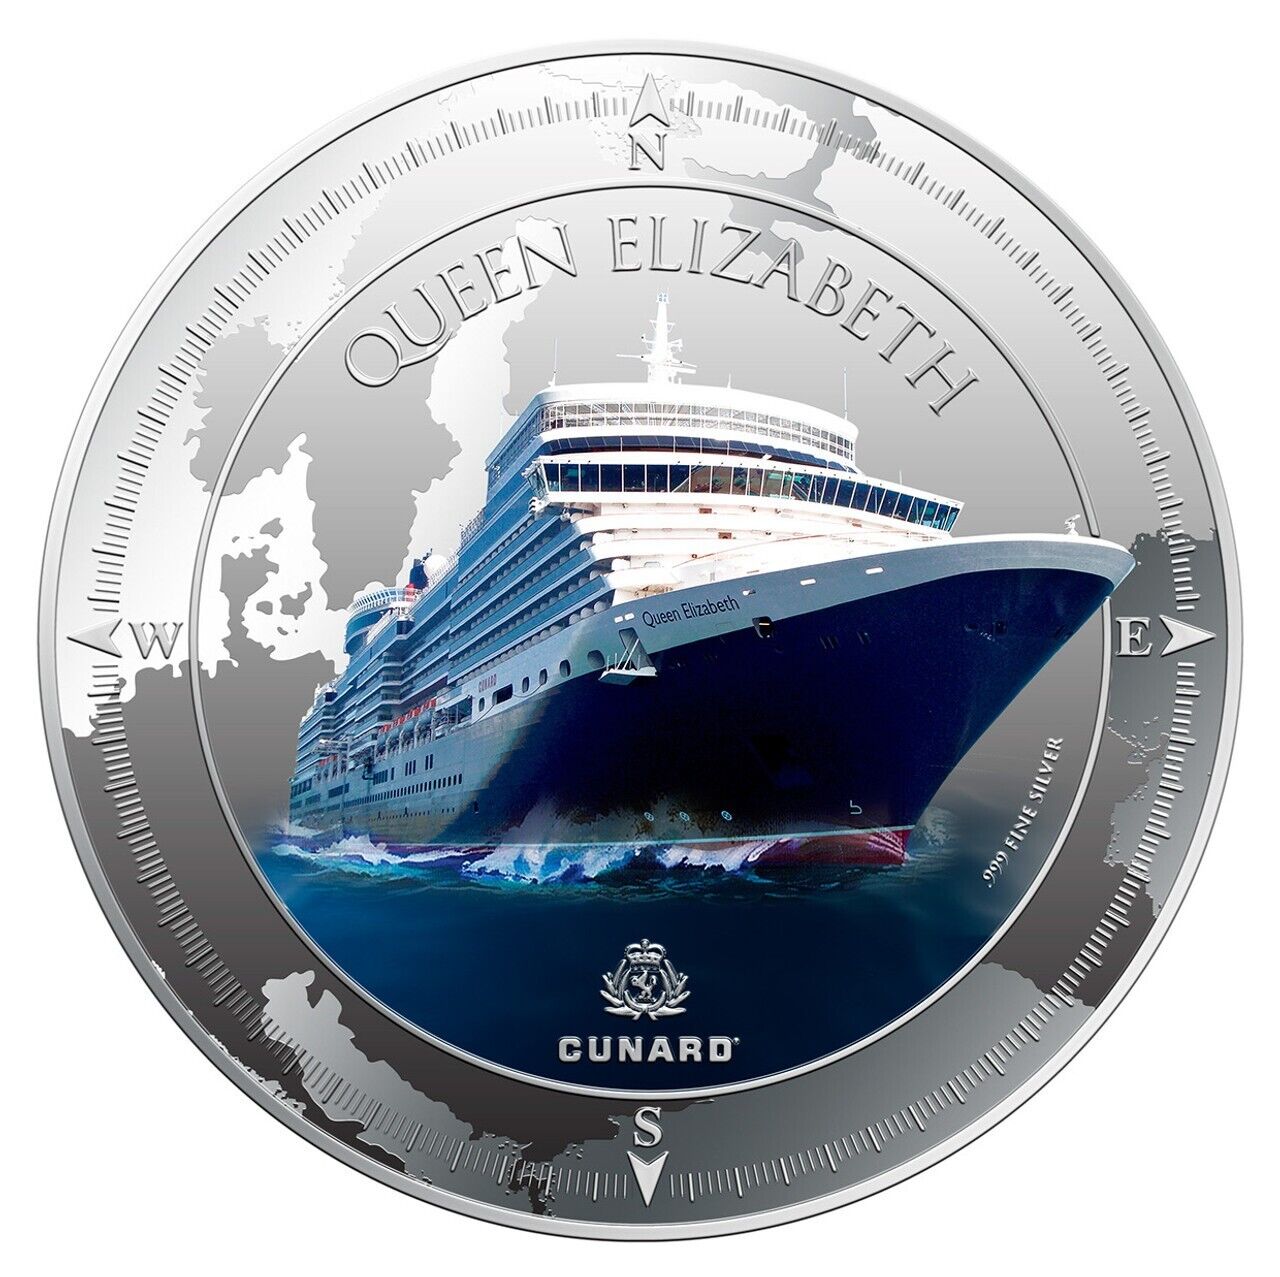 1 Oz Silver Coin 2013 Pitcairn Island $2 Cunard Lines - Queen Elizabeth Compass-classypw.com-1